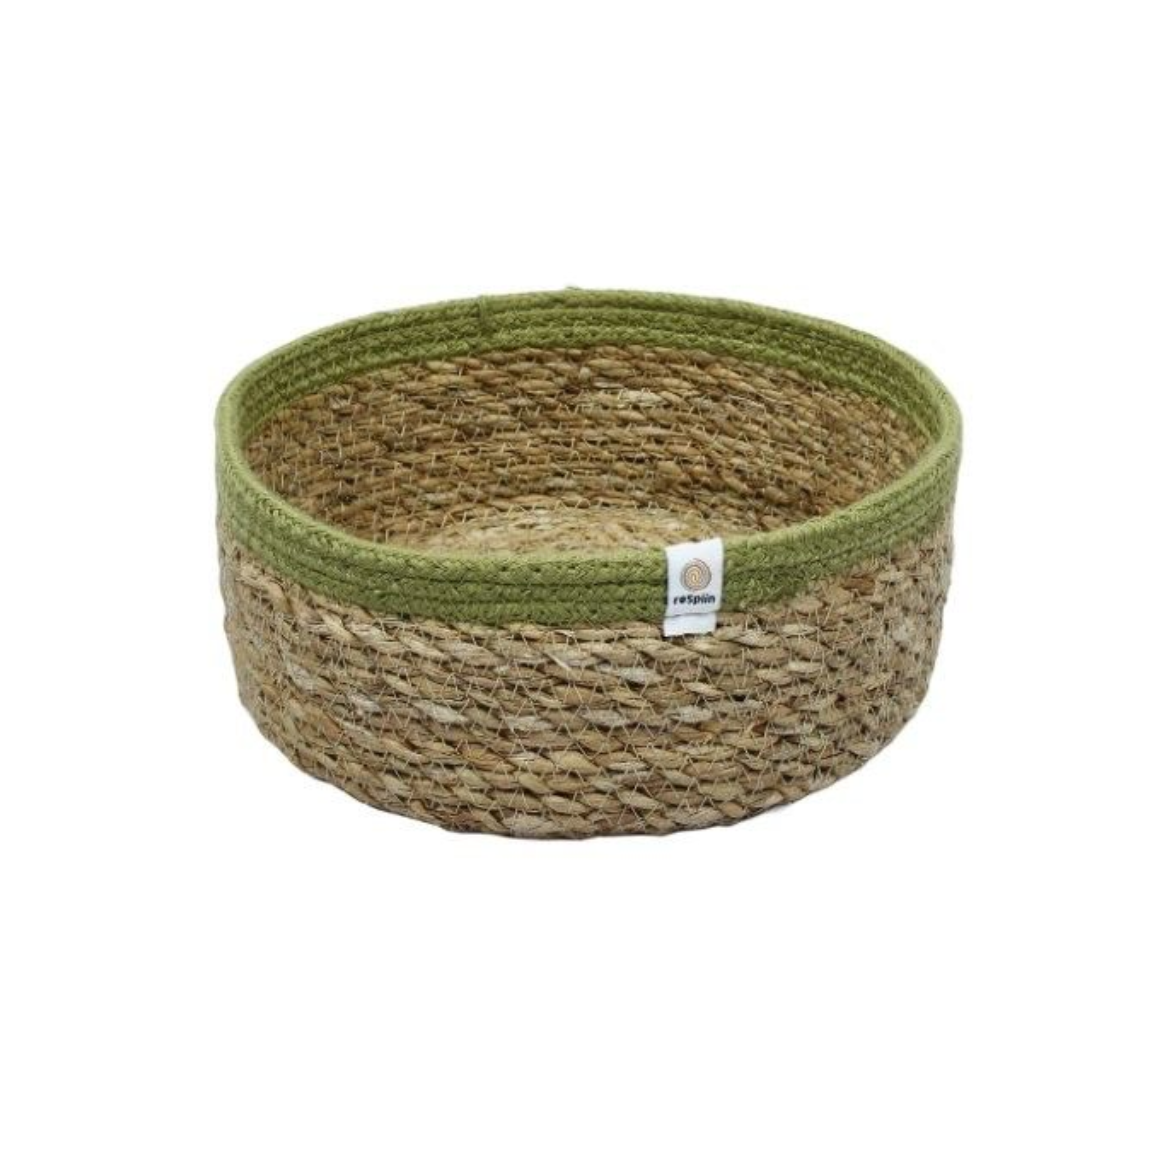 Shallow Seagrass and Jute Basket – Medium – Natural/Green